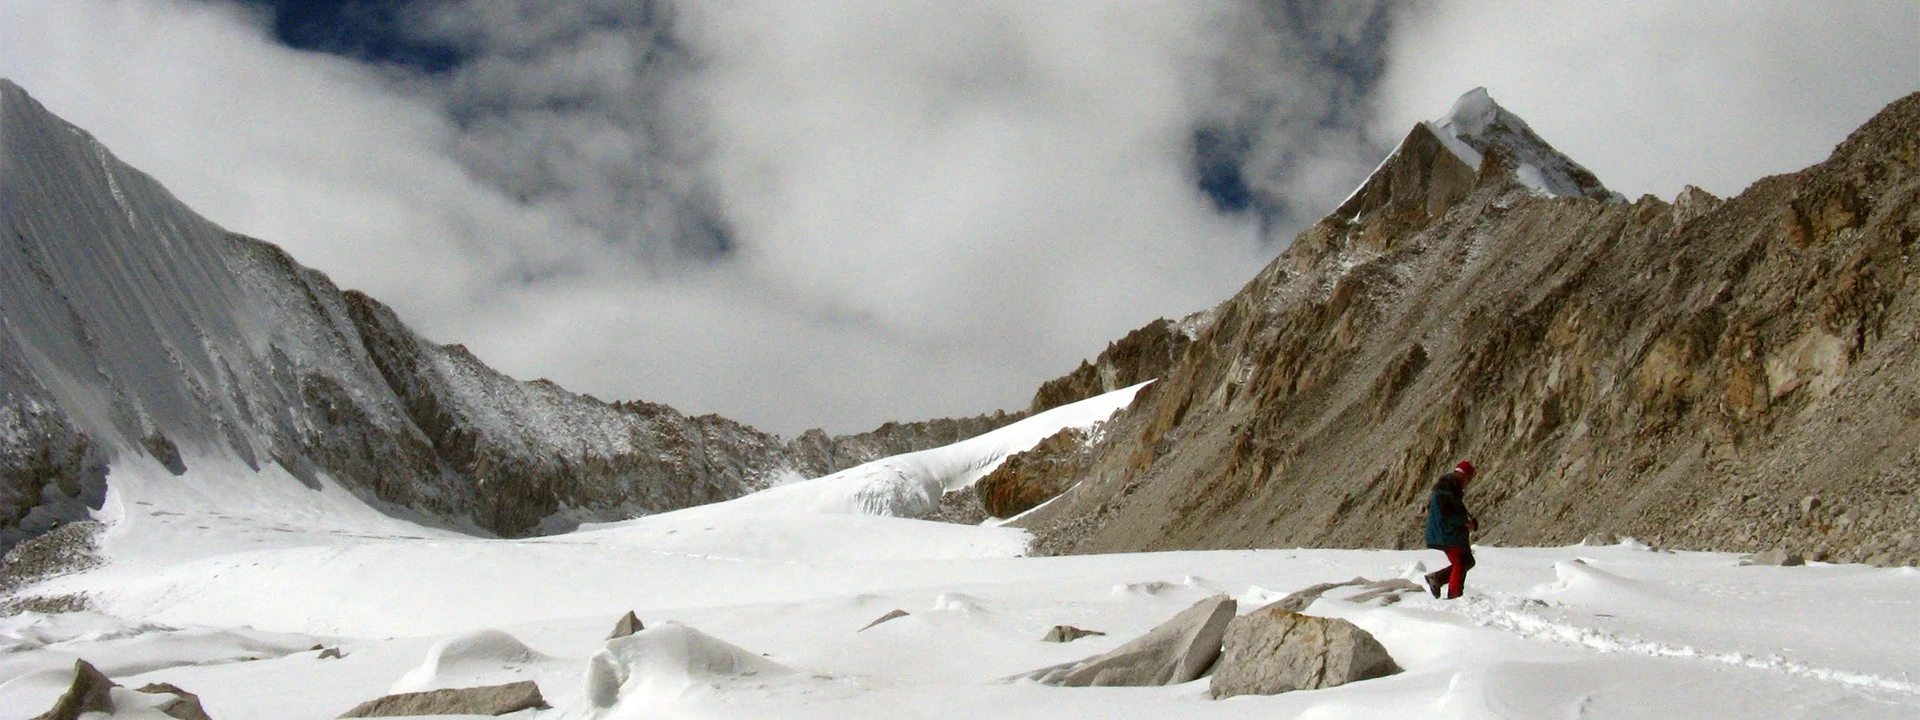 Mt. Makalu Expedition (8463m)